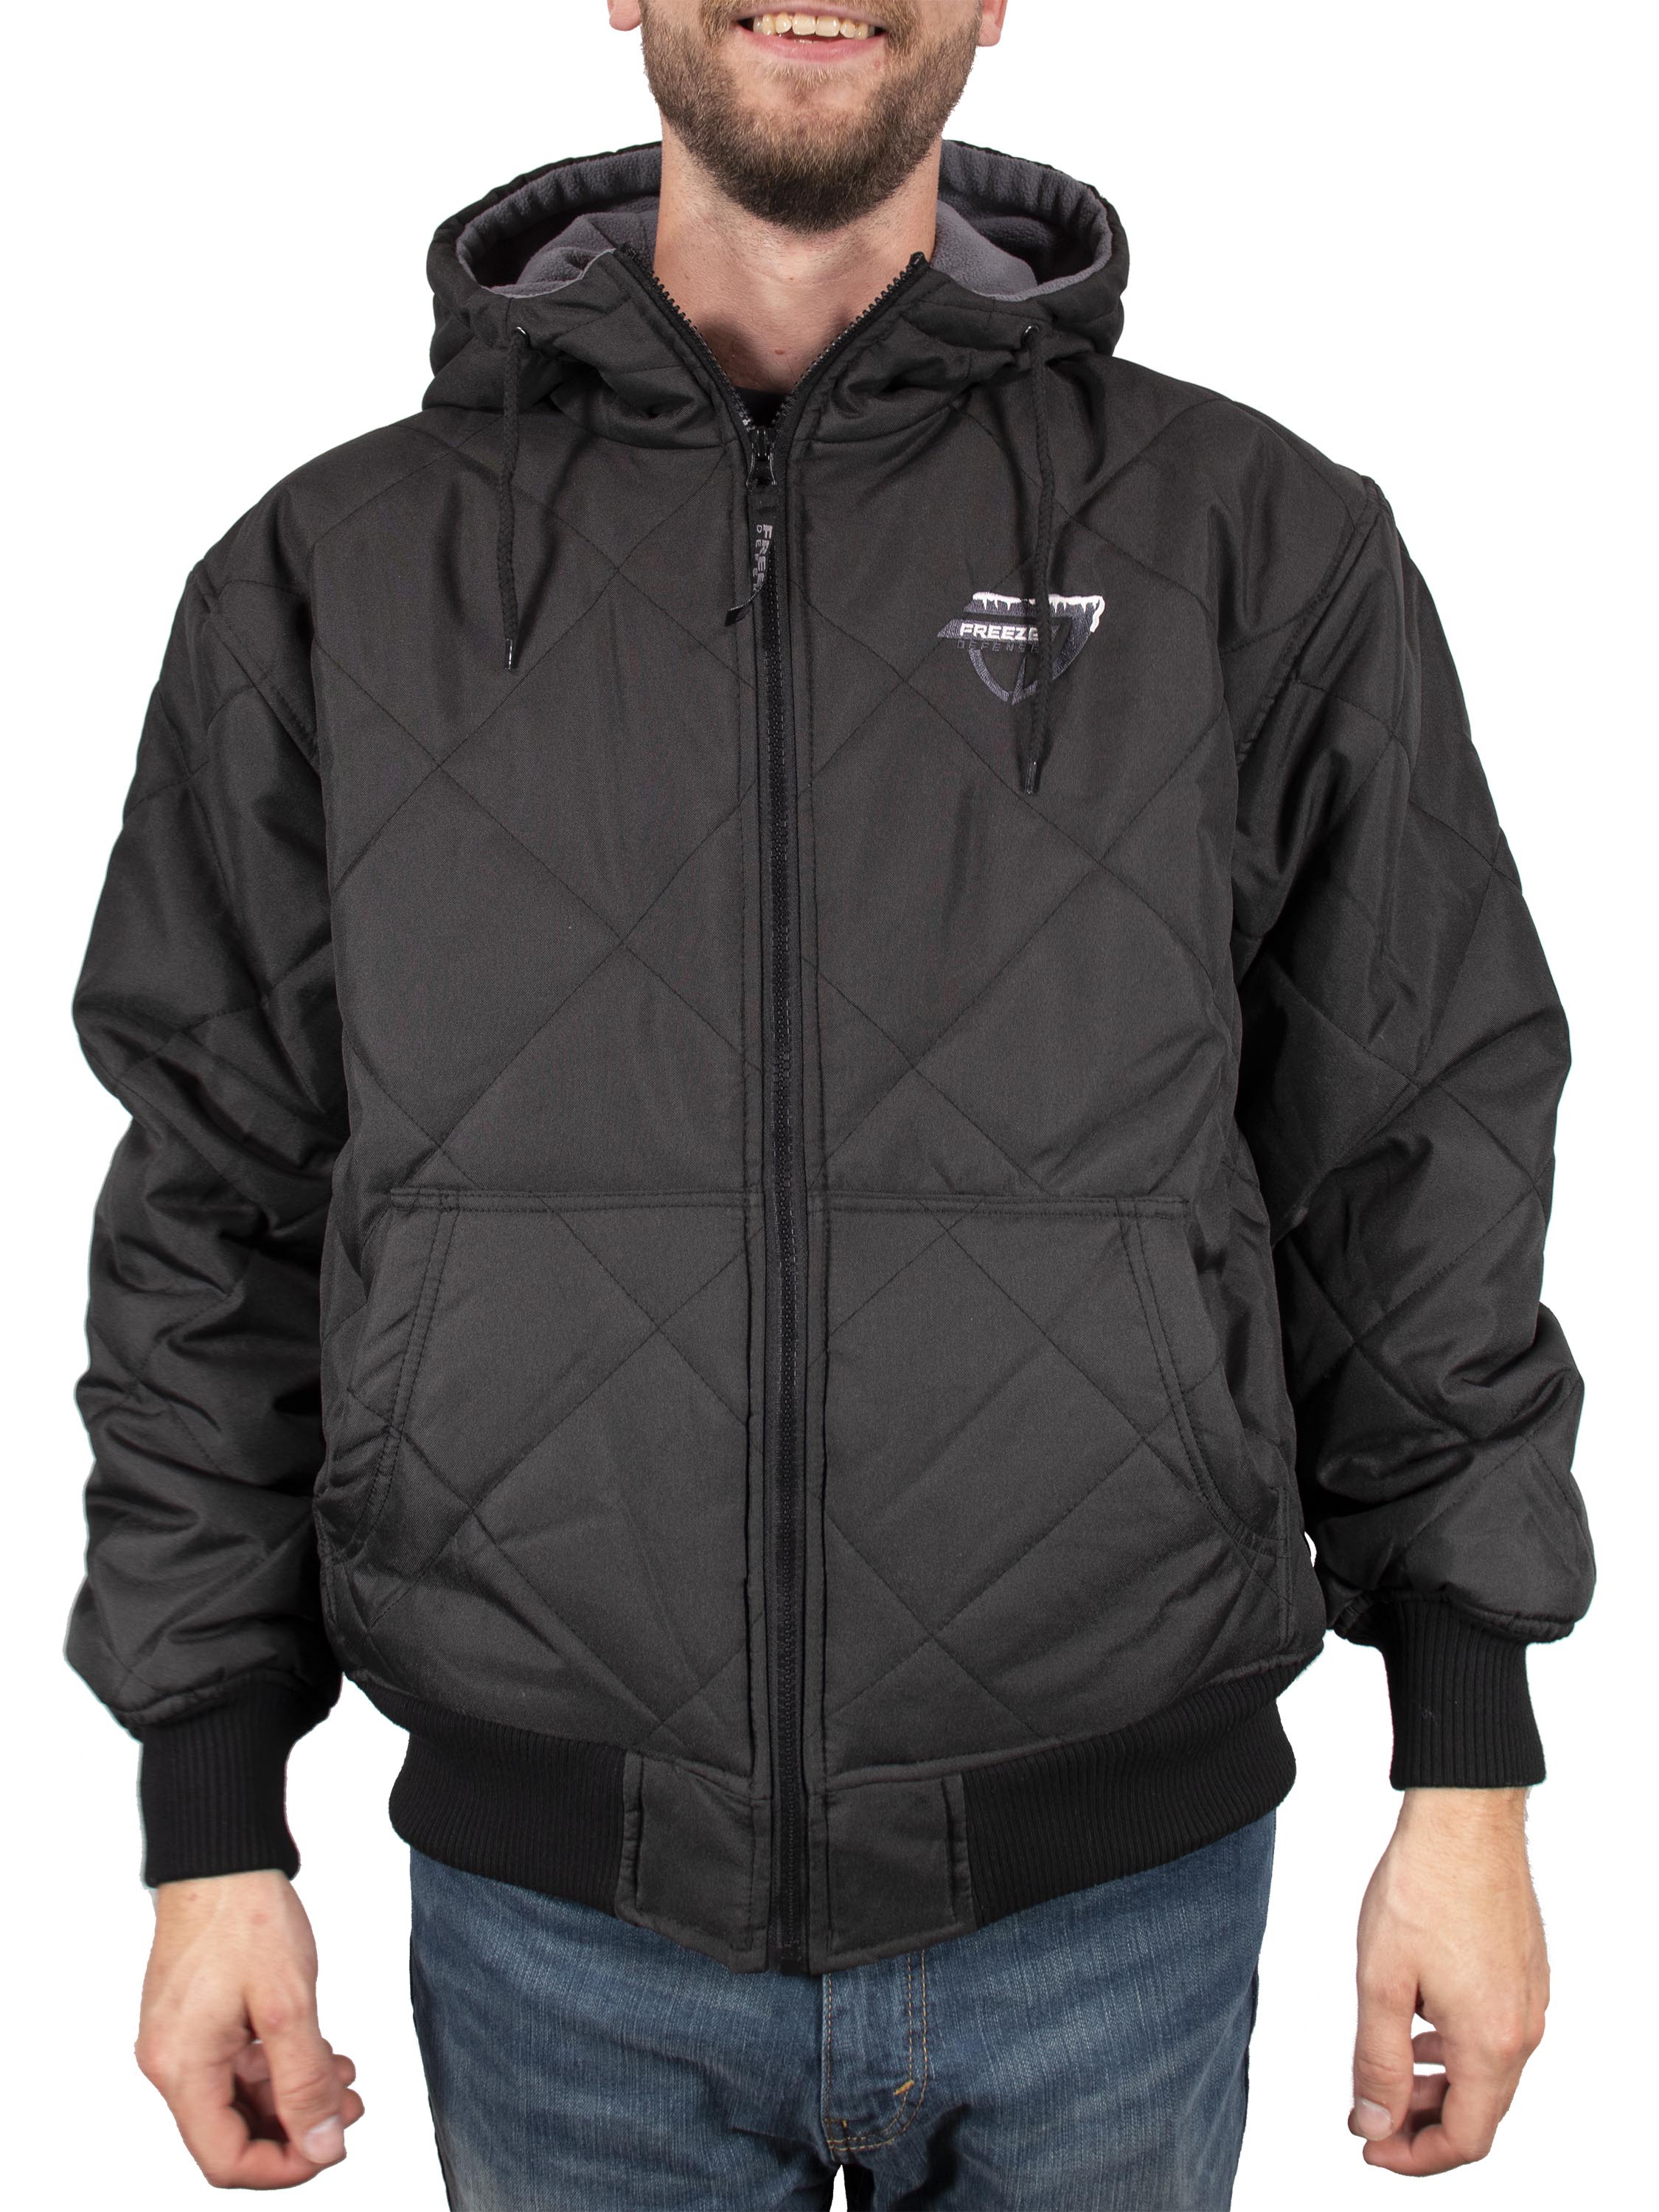 Freeze Defense Mens Fleece Lined Quilted Jacket (Regular and Big 